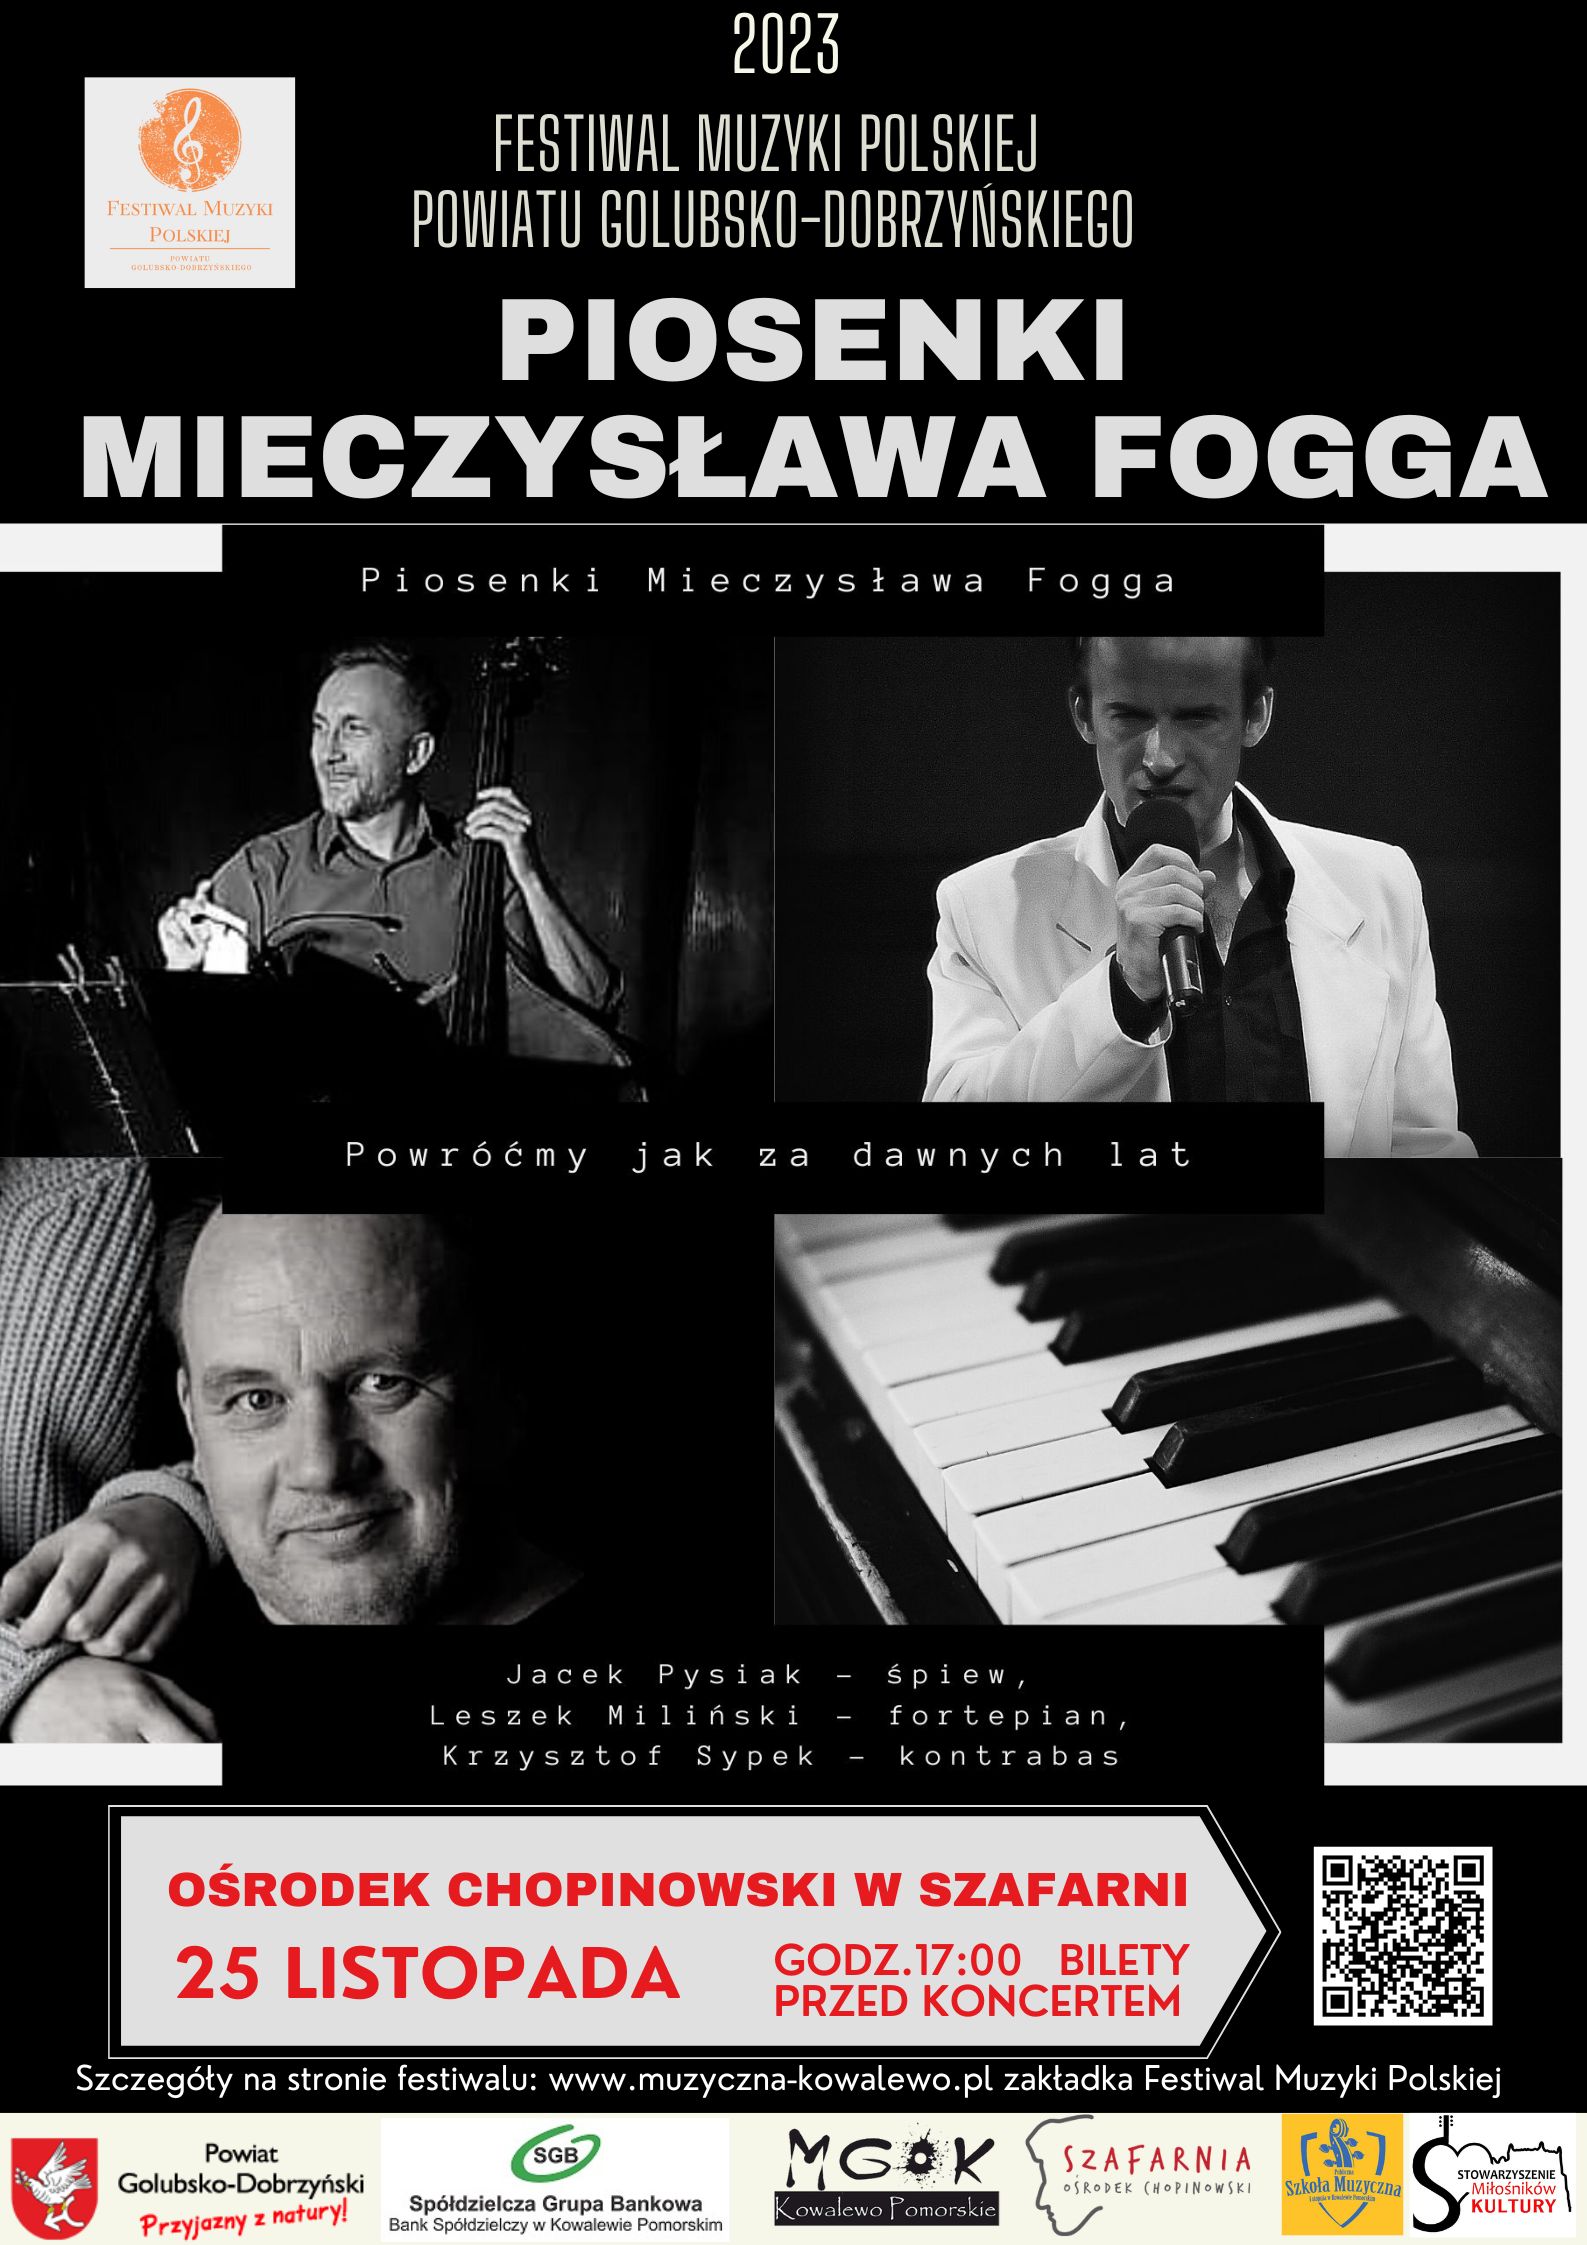 FOGG SZAFARNIA Festiwal Muzyki Polskiej 2023 1